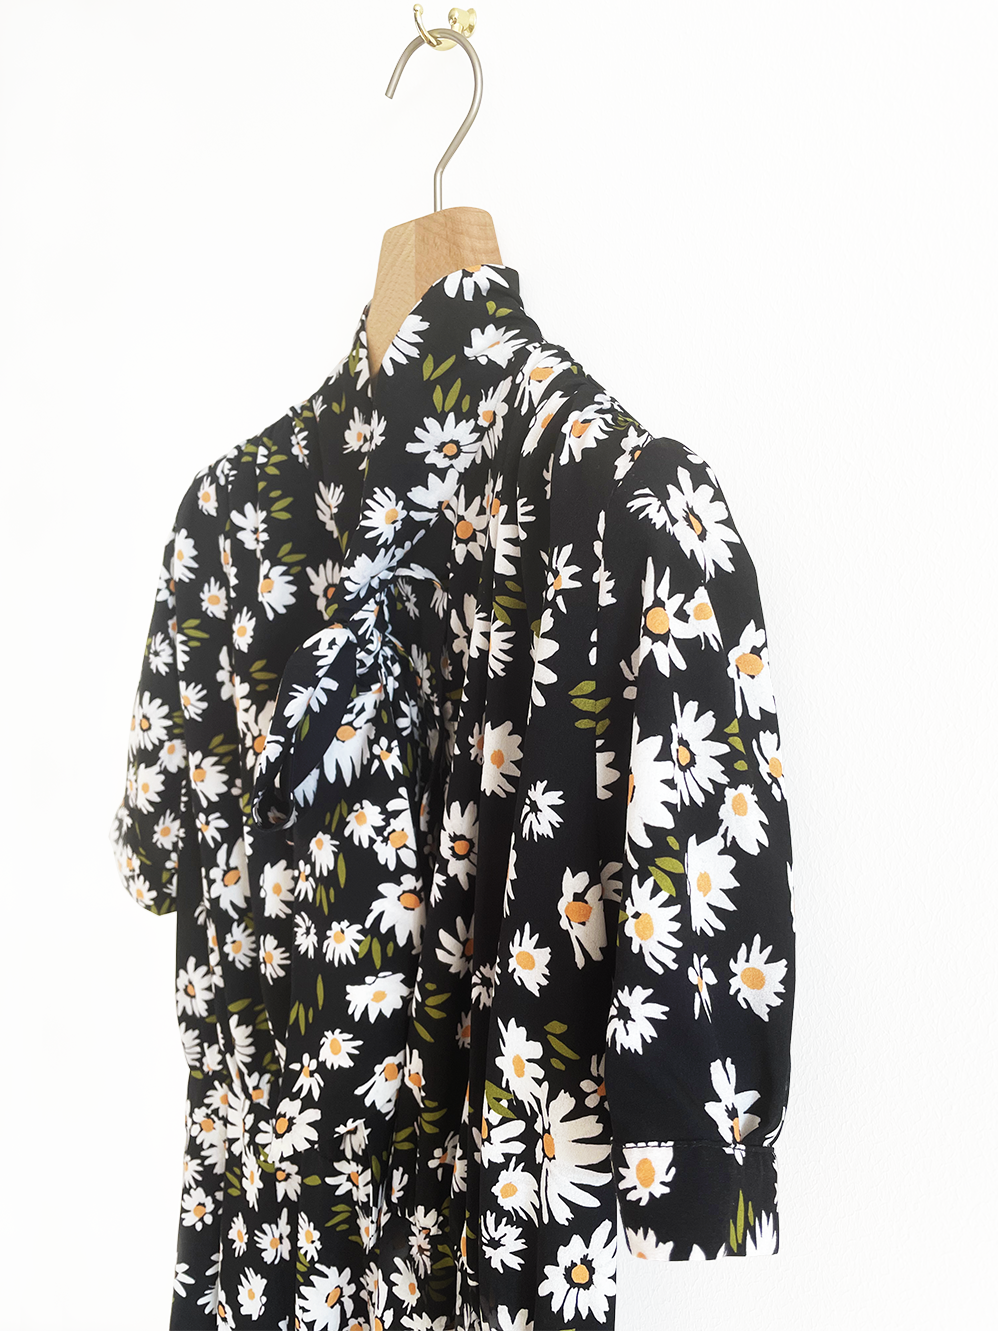 Black Silk Dress with Daisy Pattern, Size M